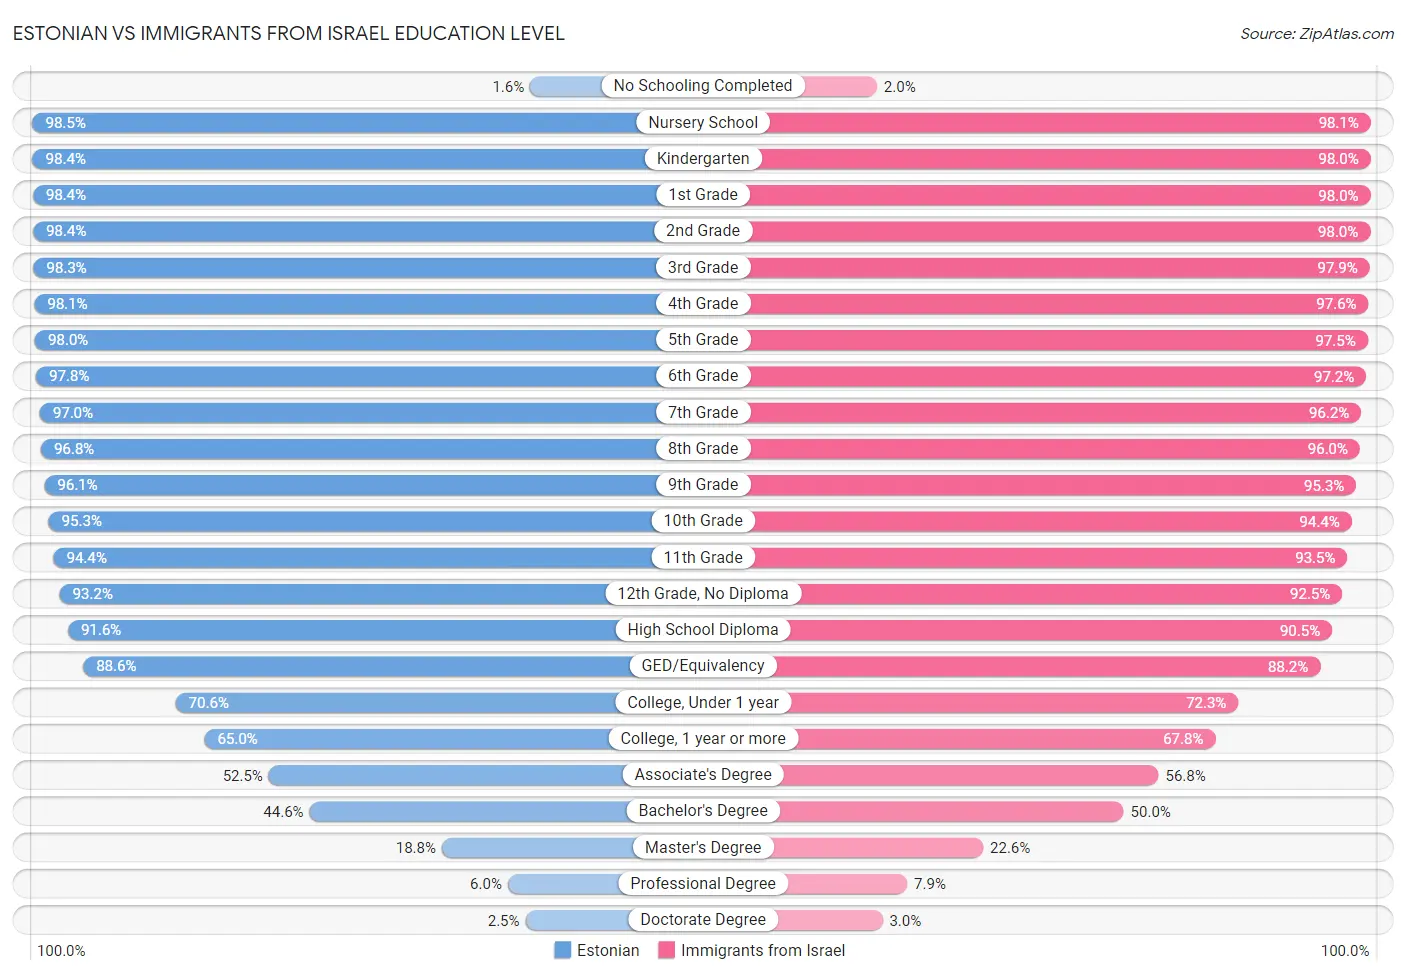 Estonian vs Immigrants from Israel Education Level